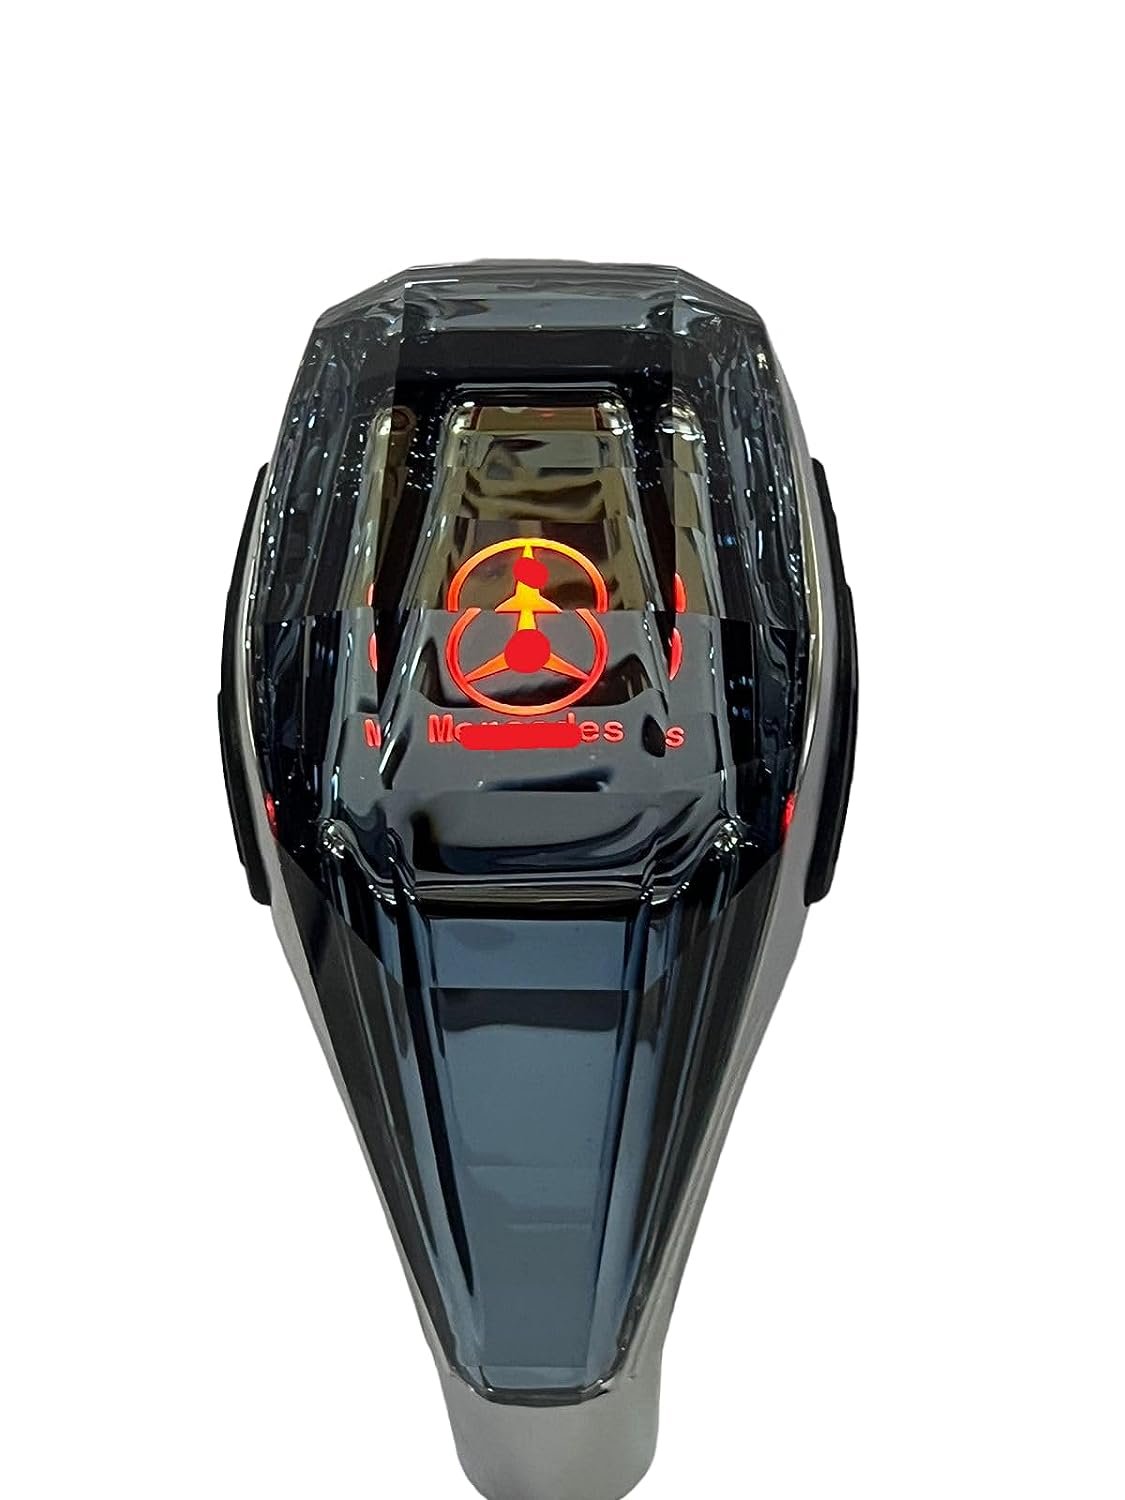 Crystal Shape Car LED Handball Crystal Shift Knob Shift Lever 7 Color Lights Illumination Touch Sensor Line Lighting Compatible with Mer-cds Car Image 